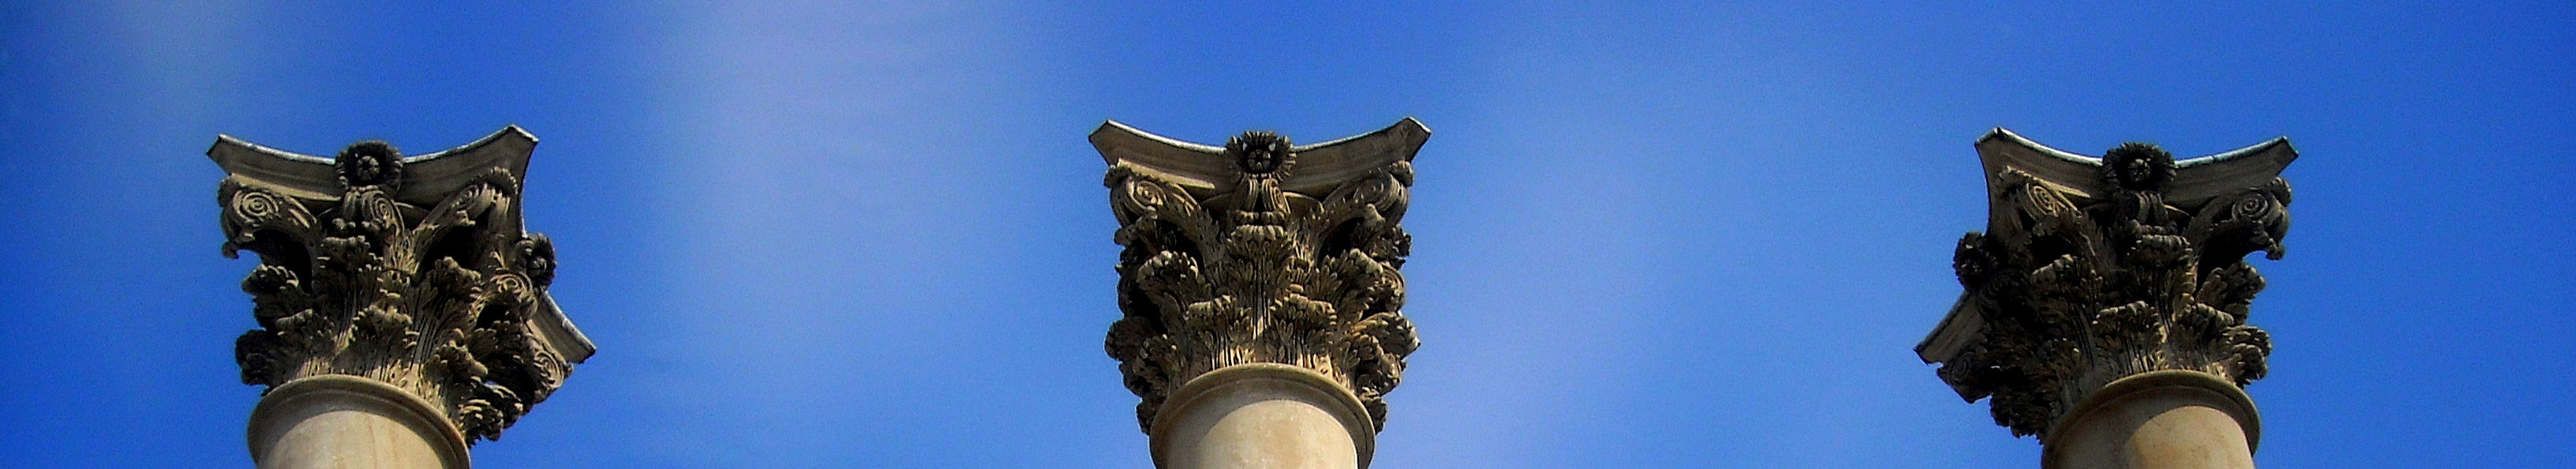 Three pillars holding up sky